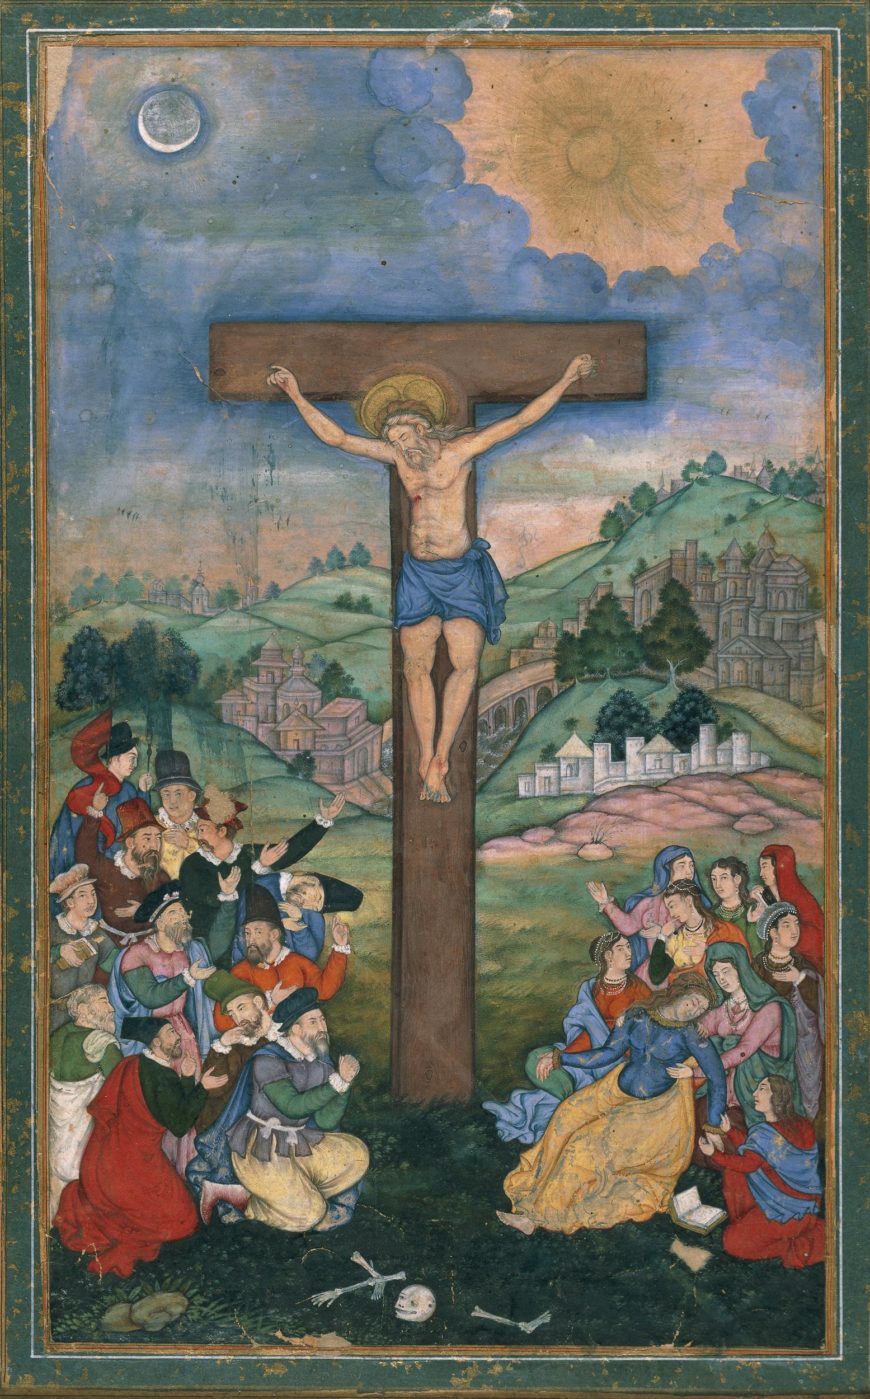 Attributed to Kesu Dás, Crucifixion Scene, c. 1590, 29.3 x 17.7 cm (The British Museum)